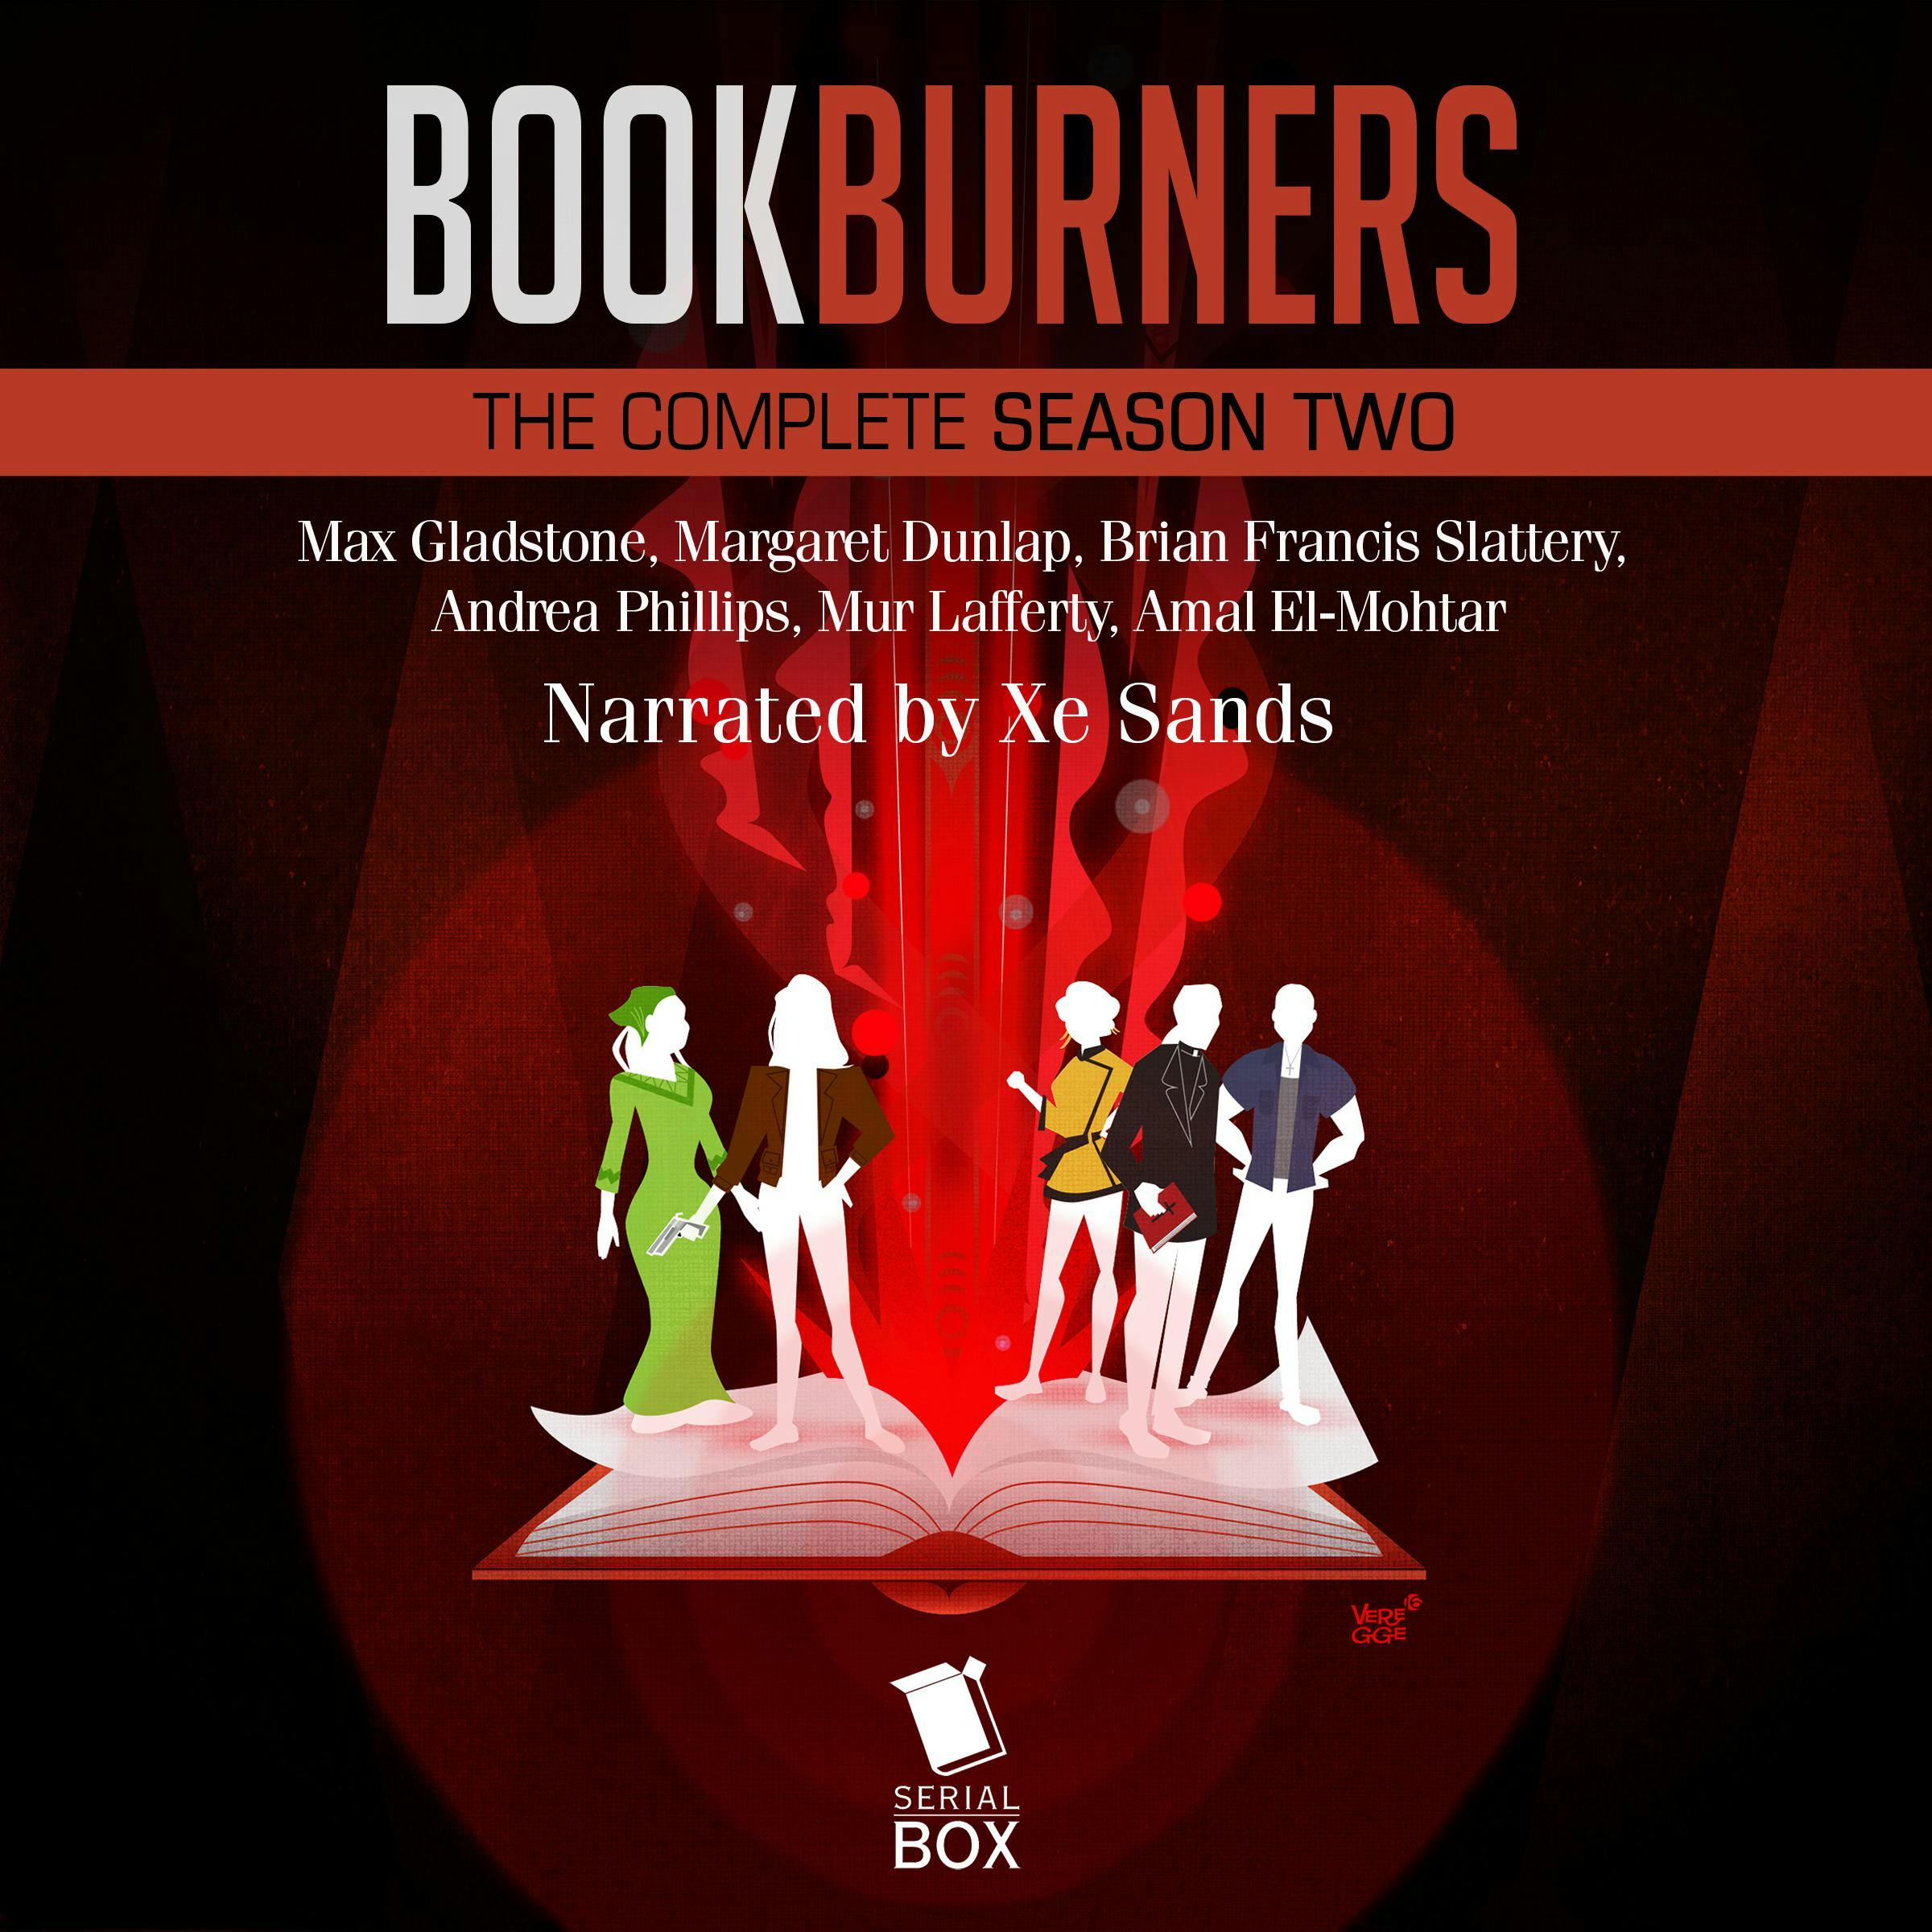 Bookburners: Season 2, Episode 11: Shock and Awe - Andrea Phillips